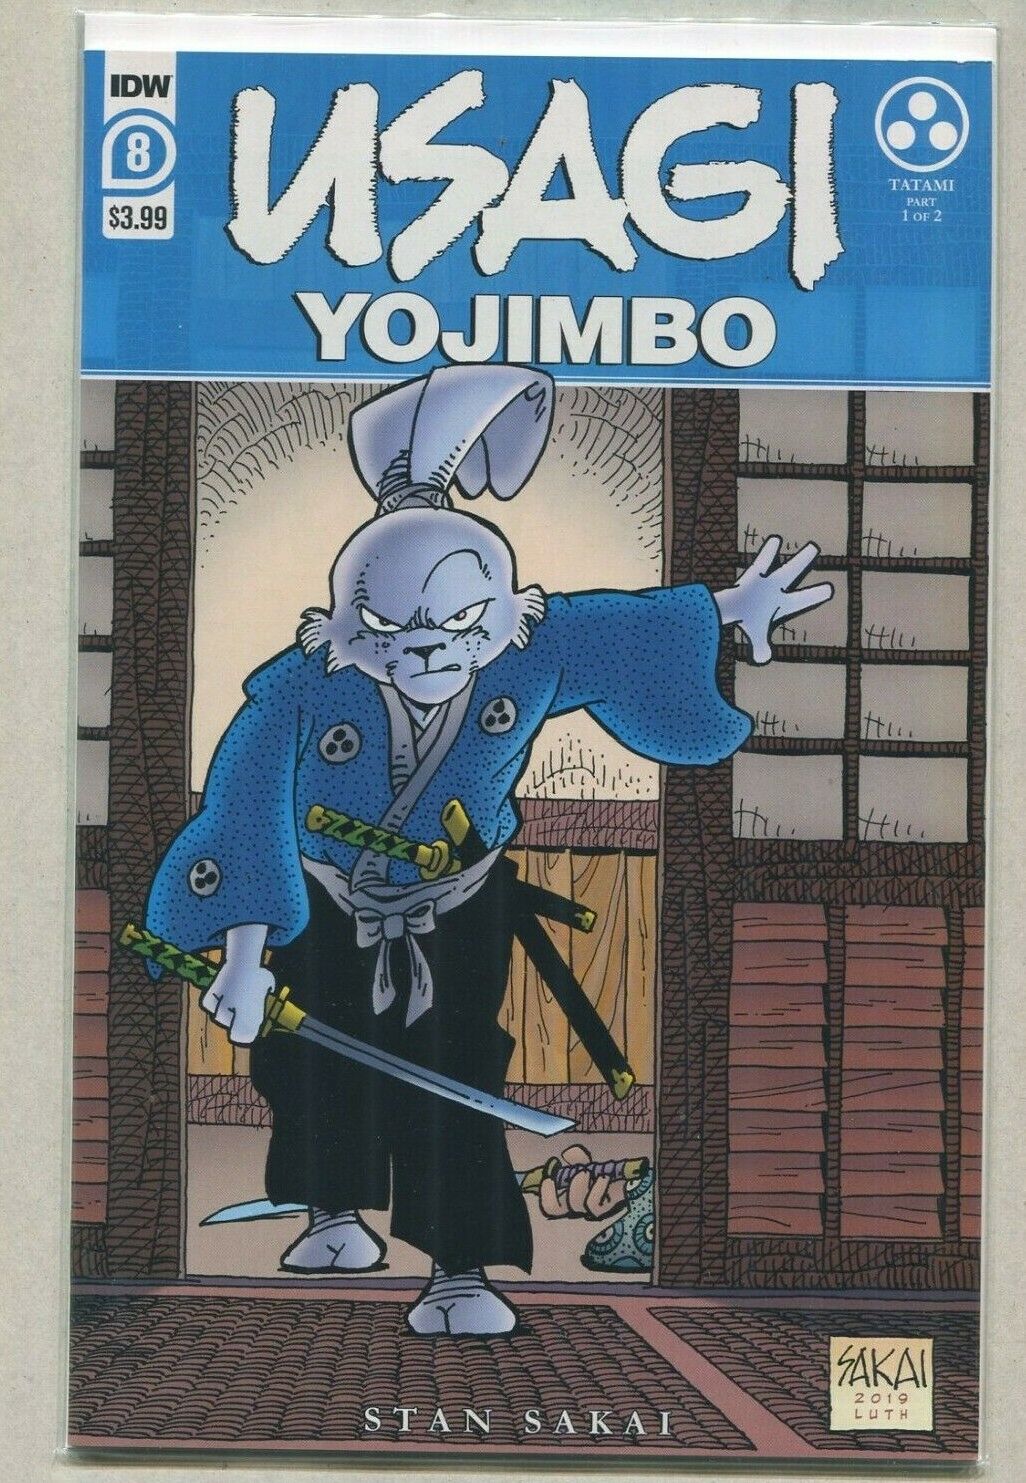 Usagi-YoJimbo  #8 NM Tatami Part 1 of 2    IDW Comics MD12